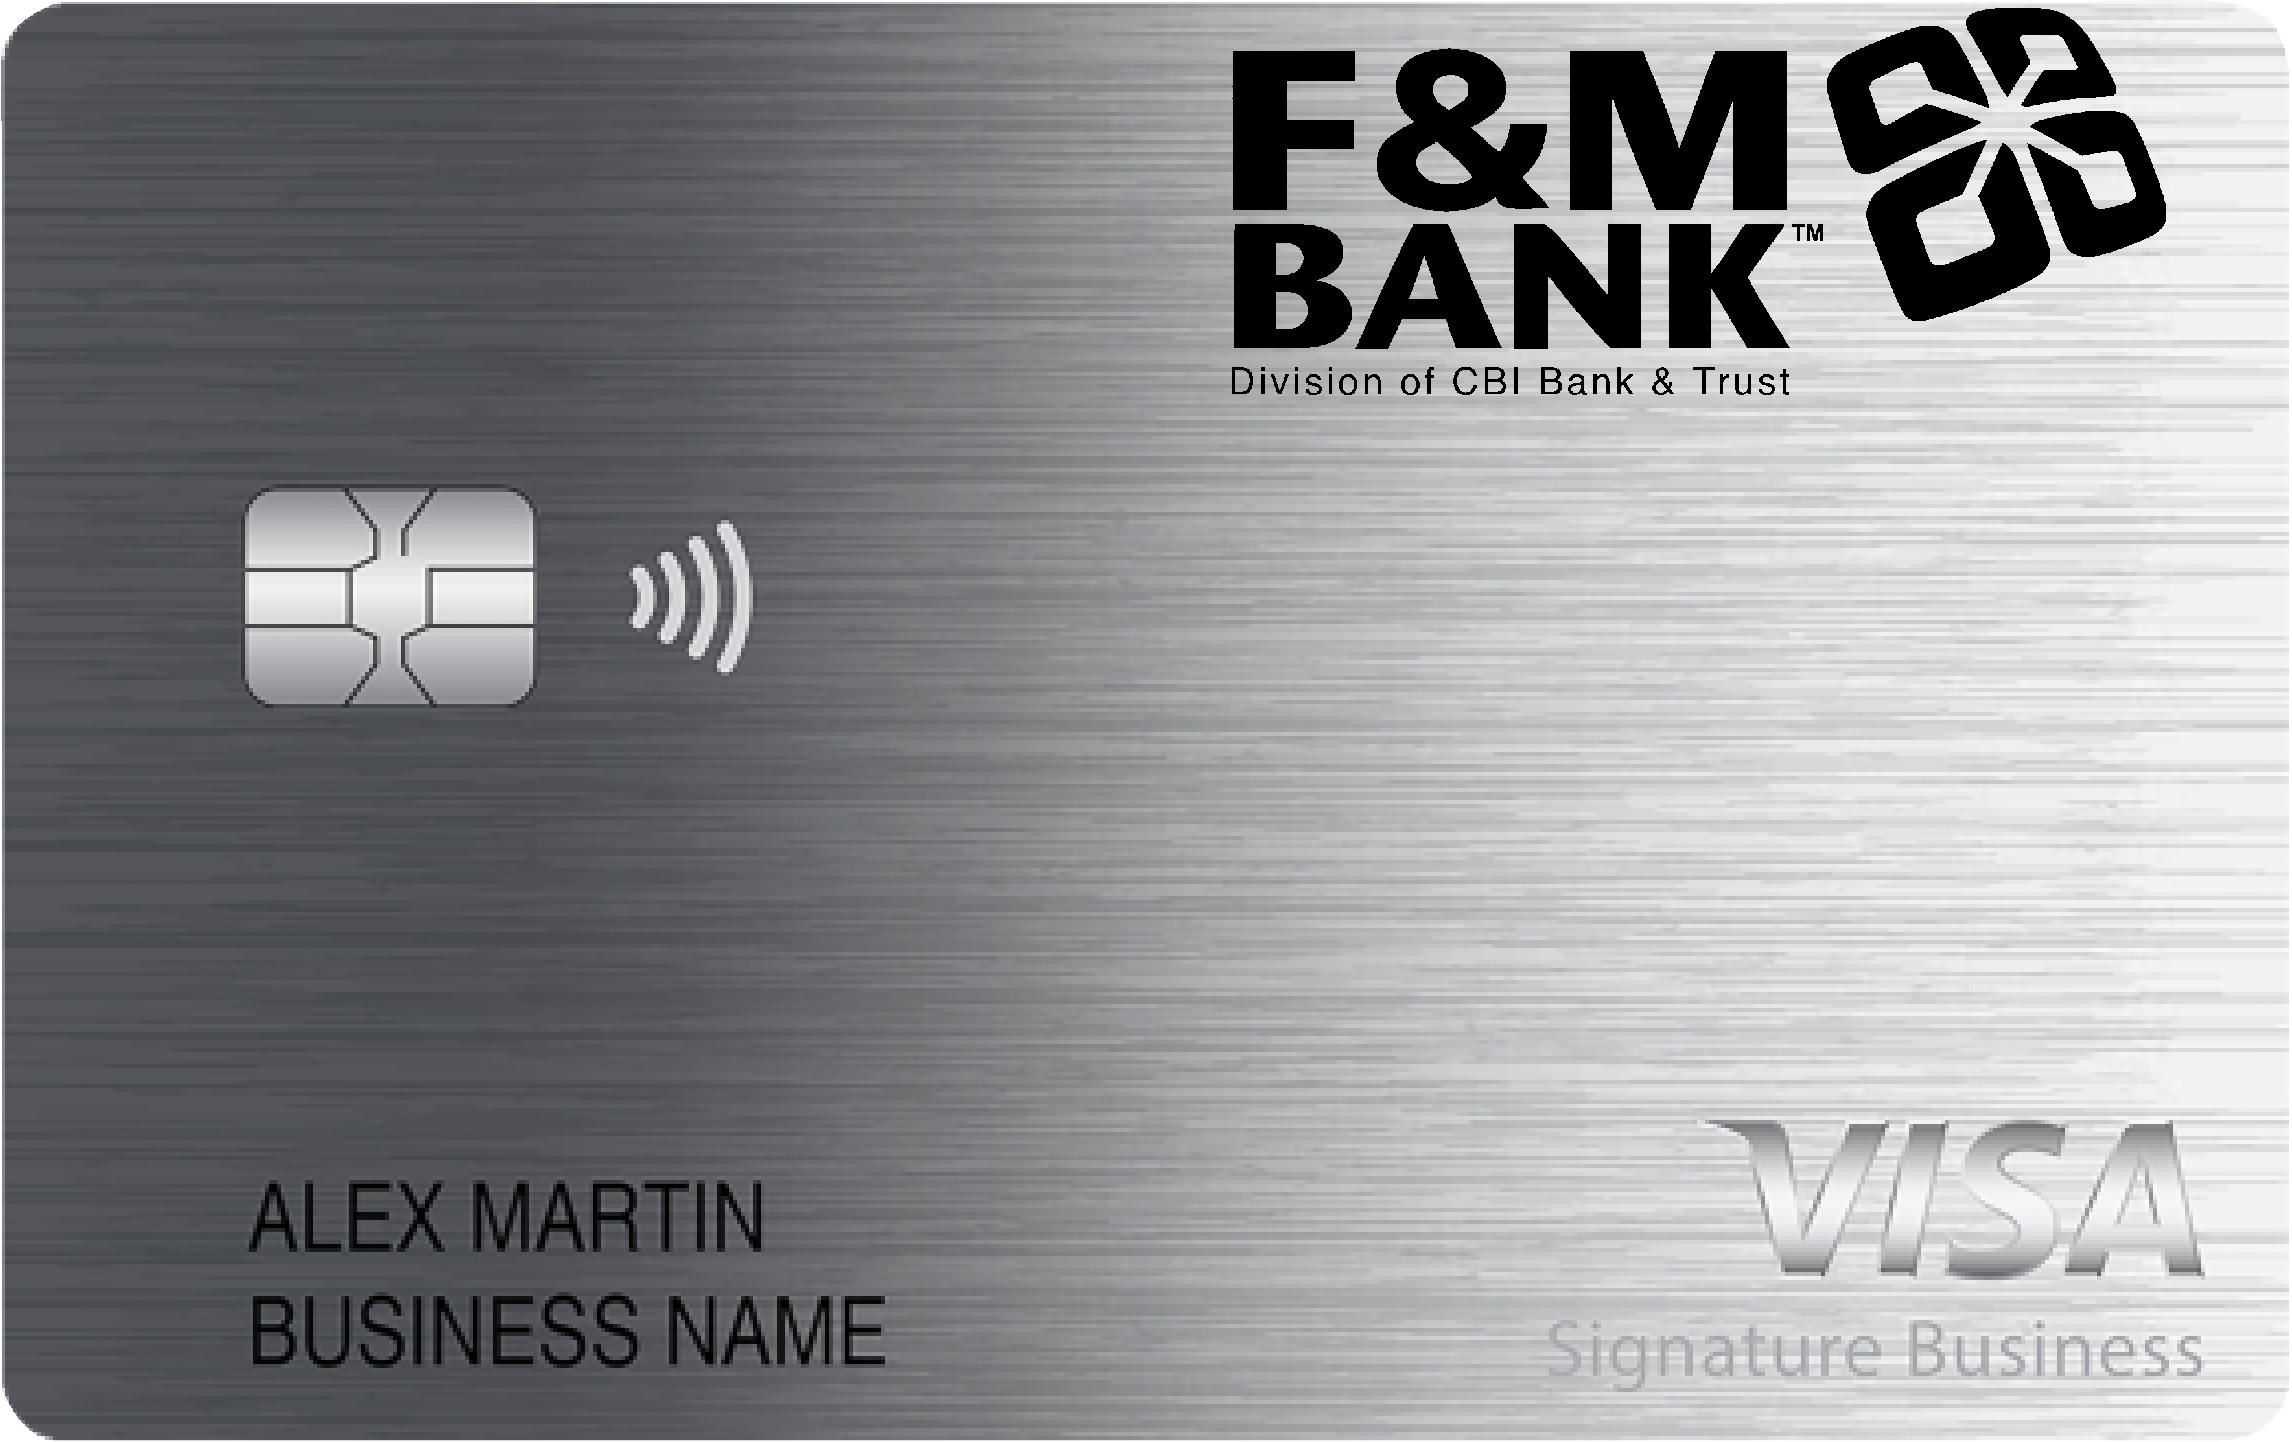 F&M Bank, Division of CBI Bank & Trust Smart Business Rewards Card